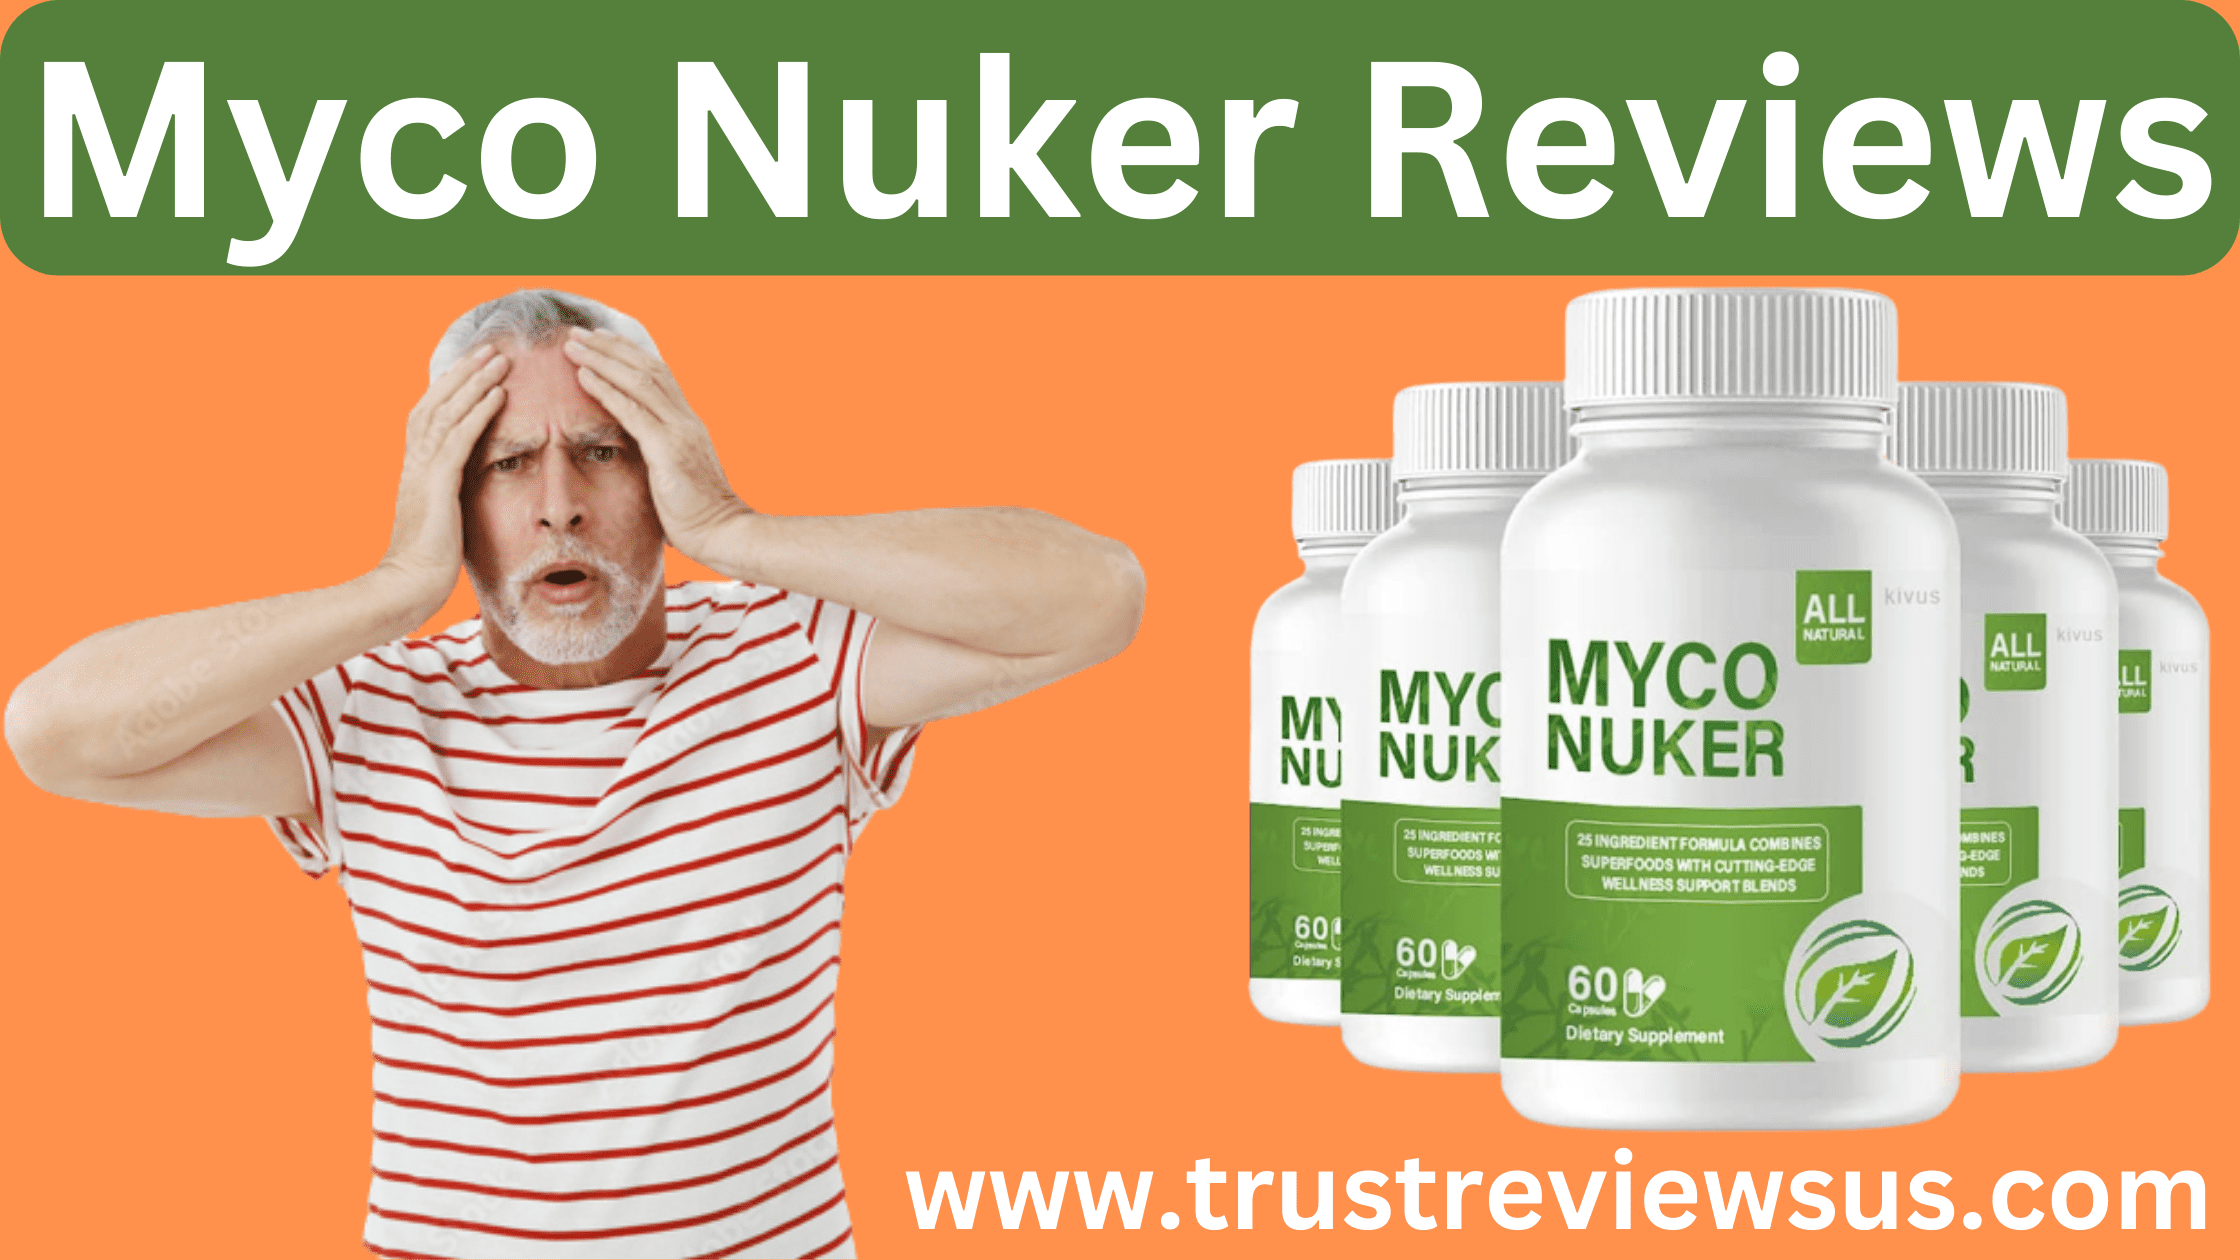 Myco Nuker Reviews